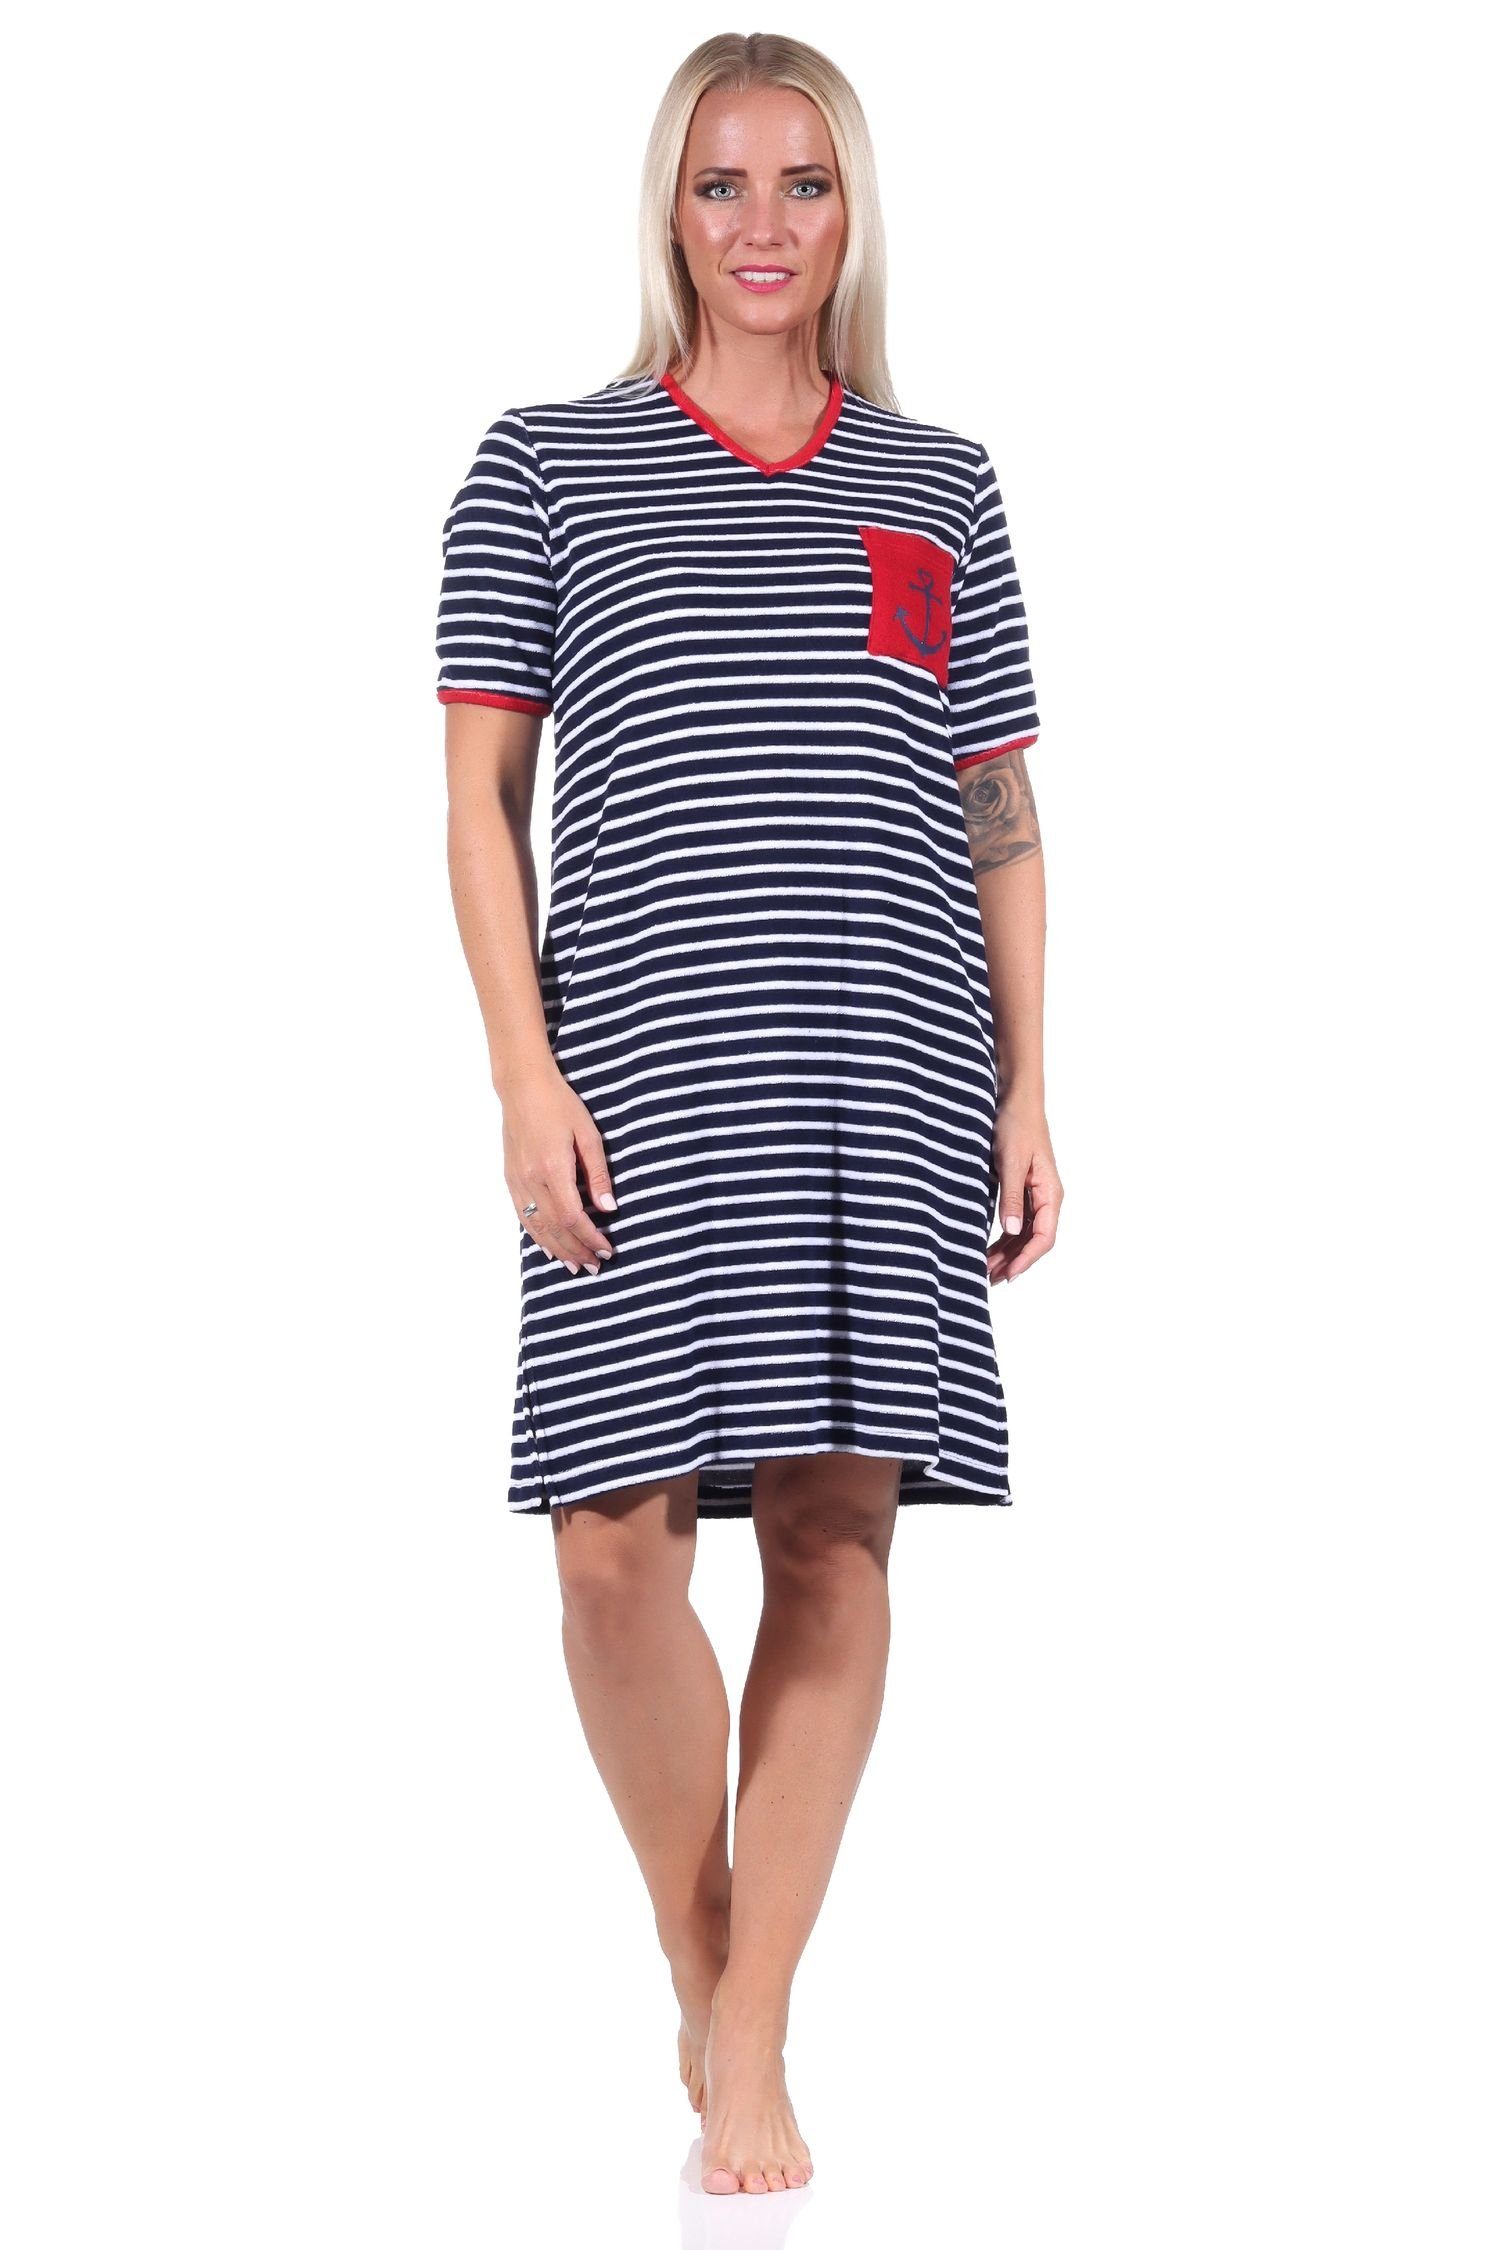 Normann Nachthemd Maritimes kurzarm Frottee Damen Nachthemd Strandkleid mit Anker Motiv marine